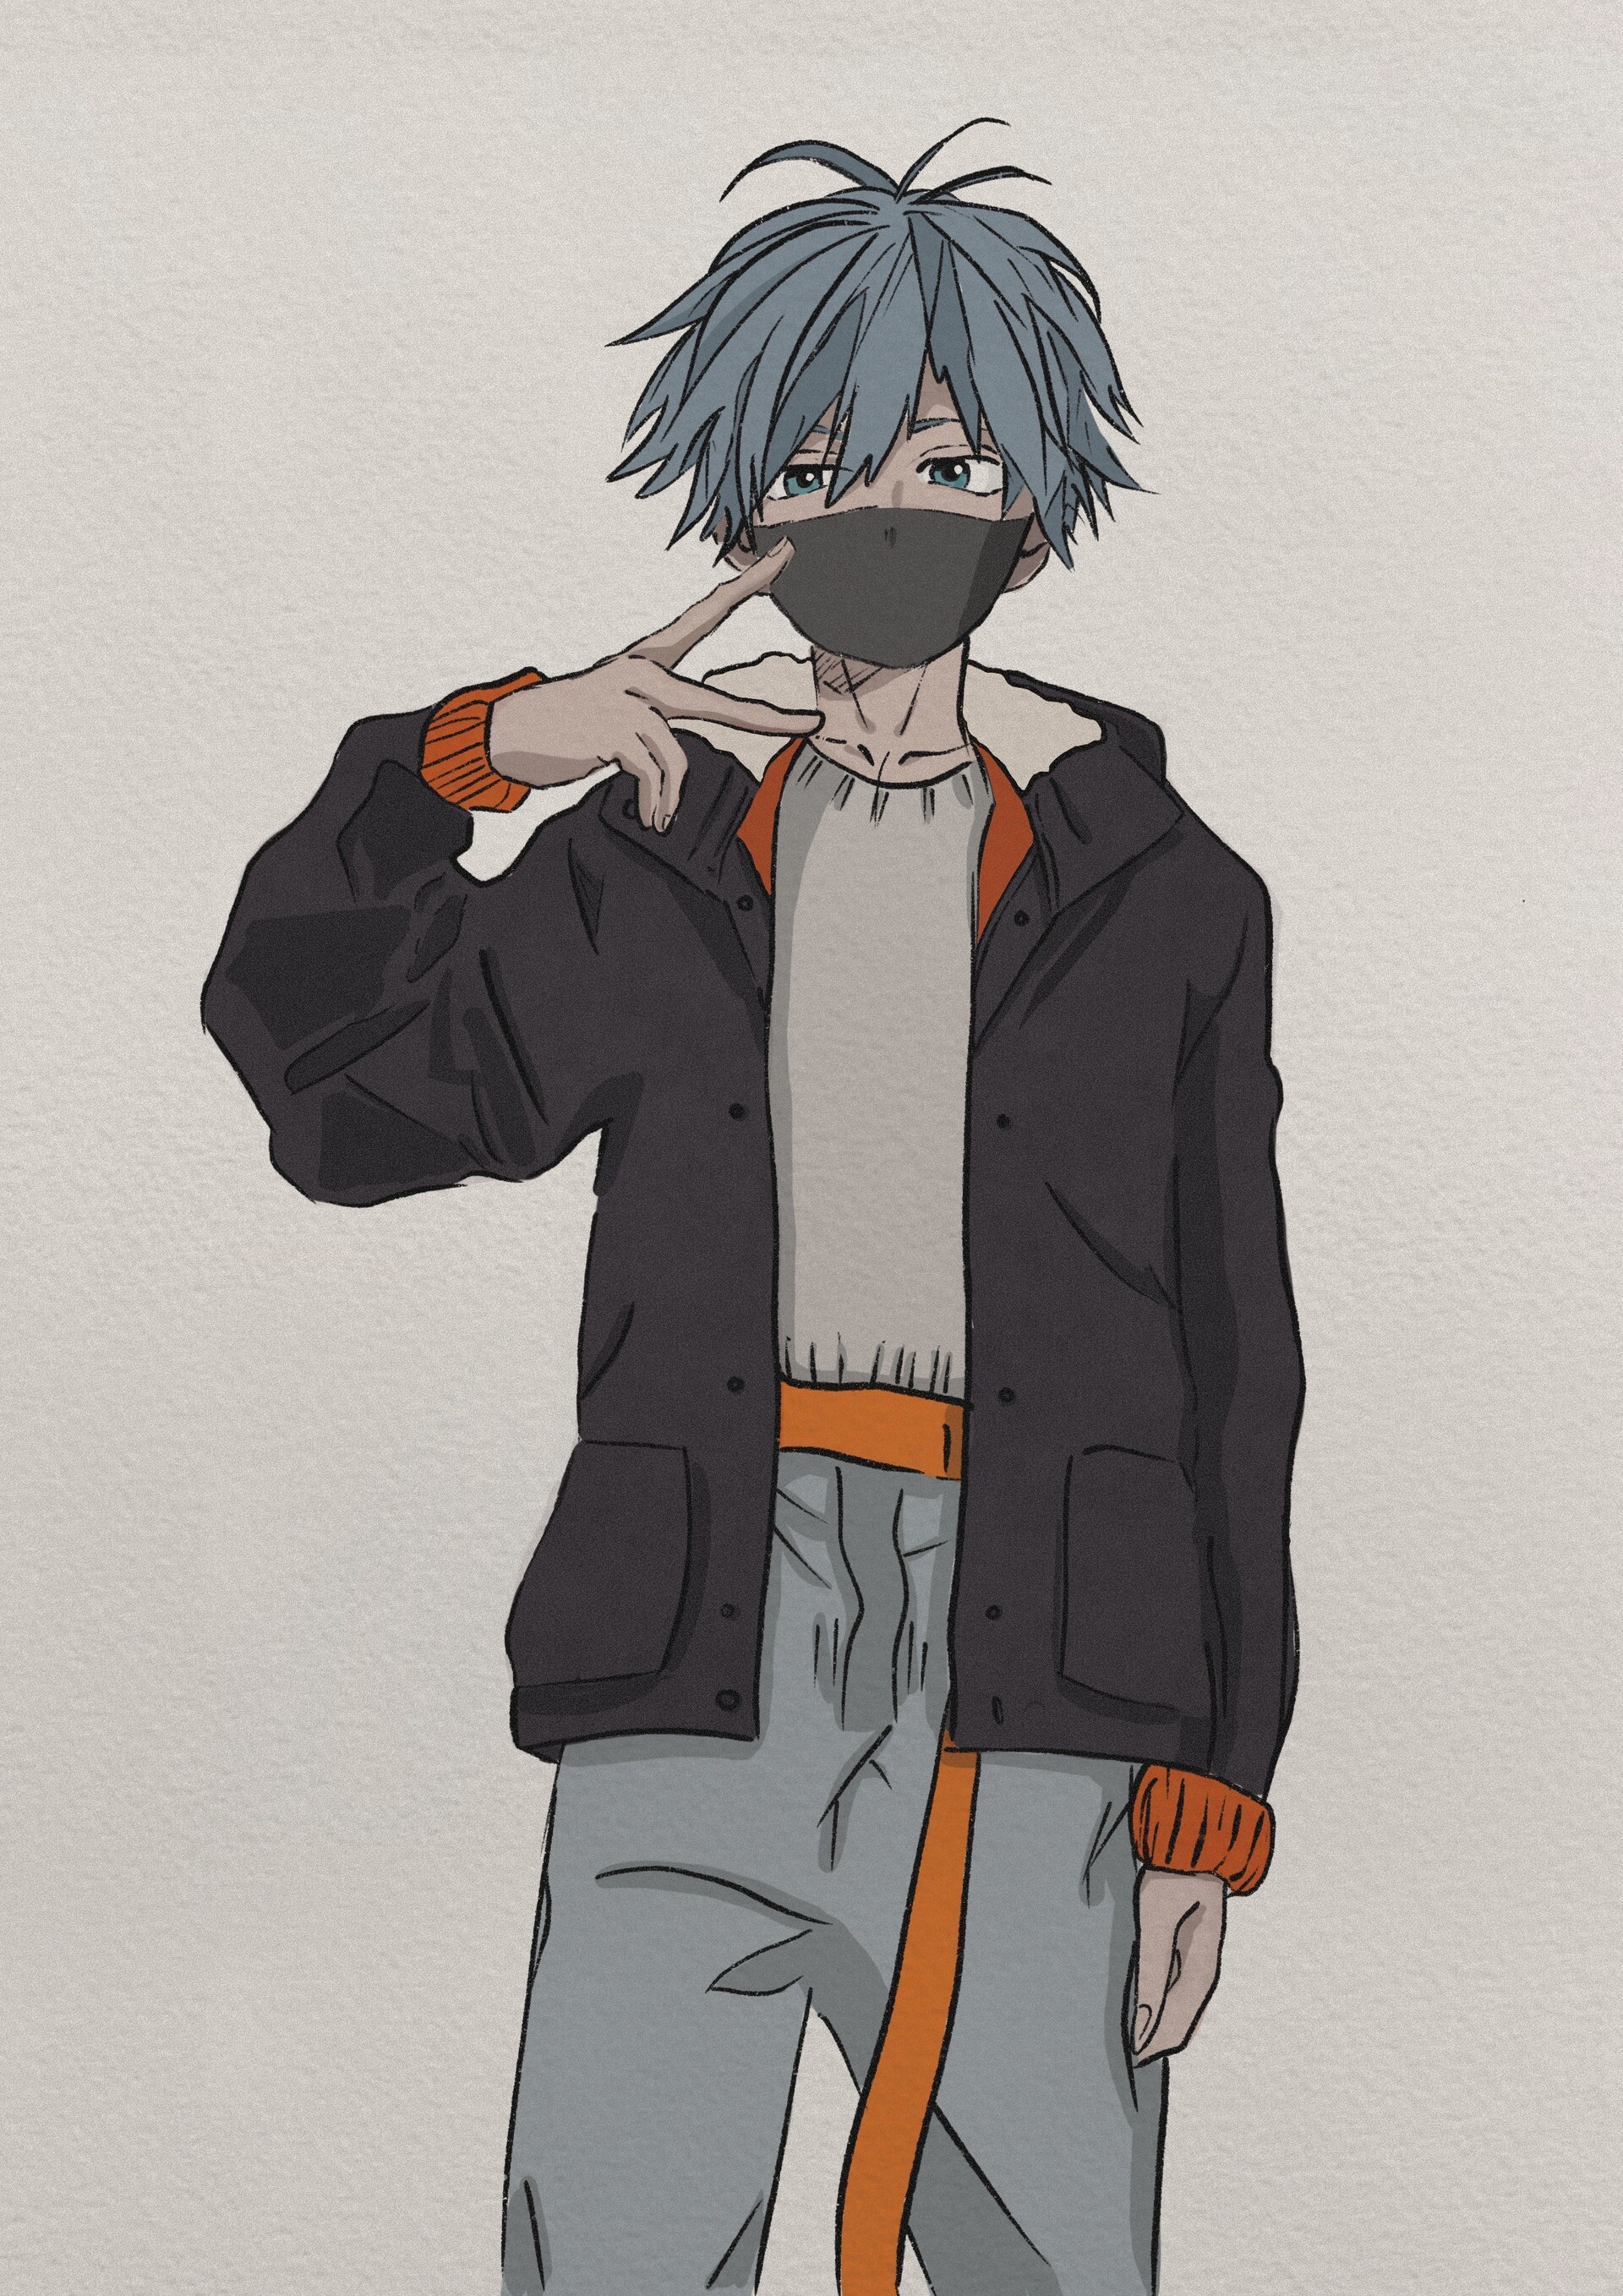 Artstation - Anime Boy